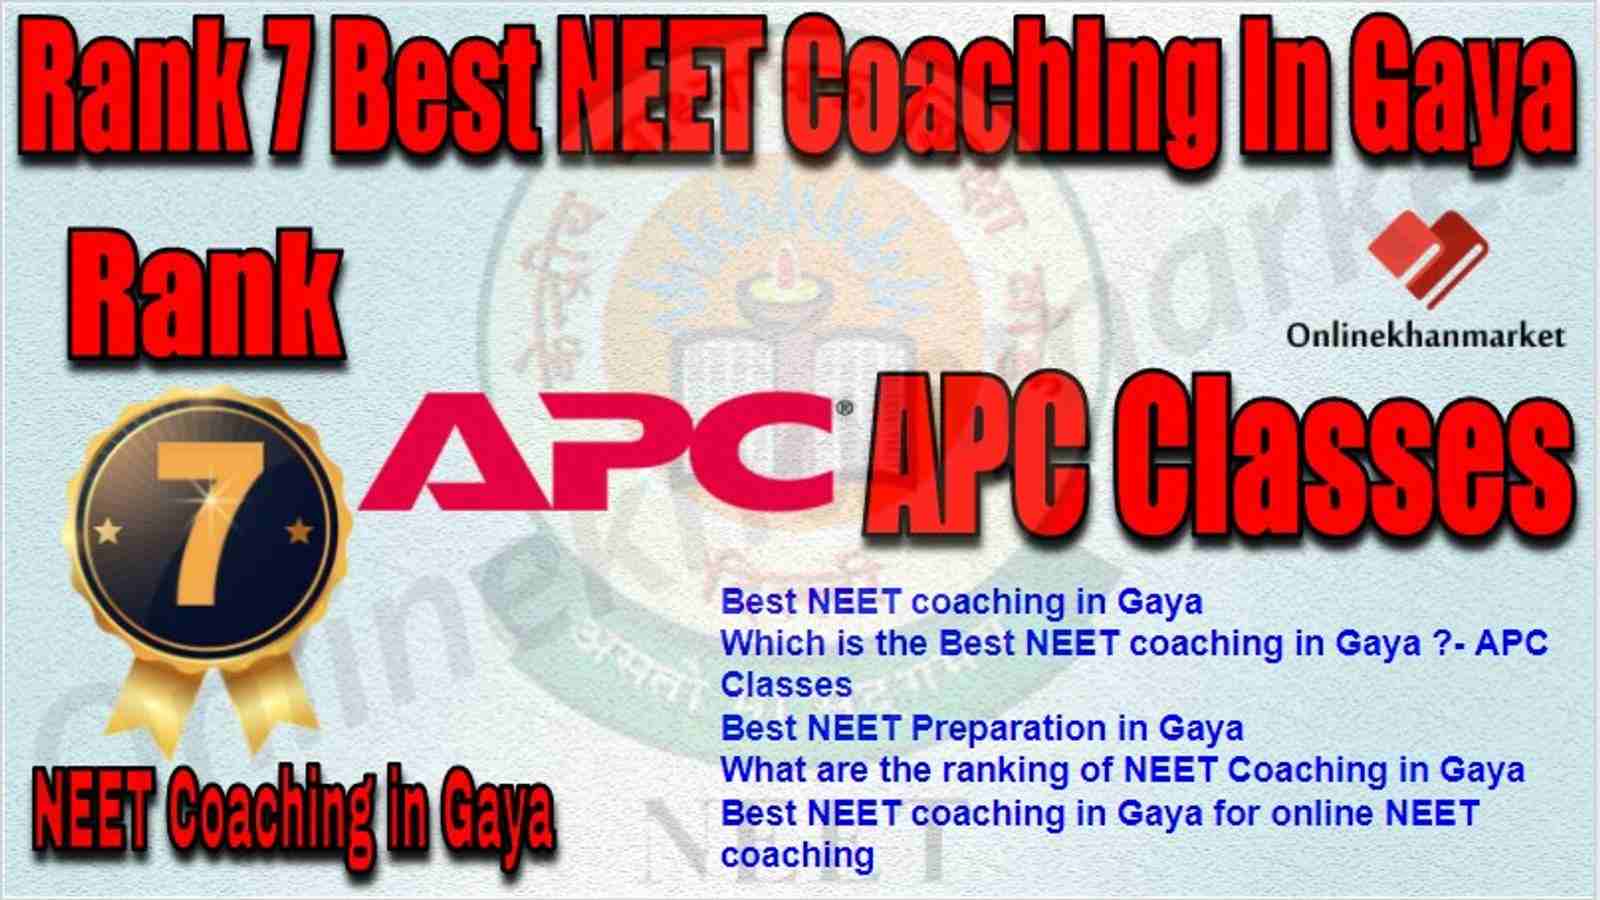 Rank 7 Best NEET Coaching Gaya